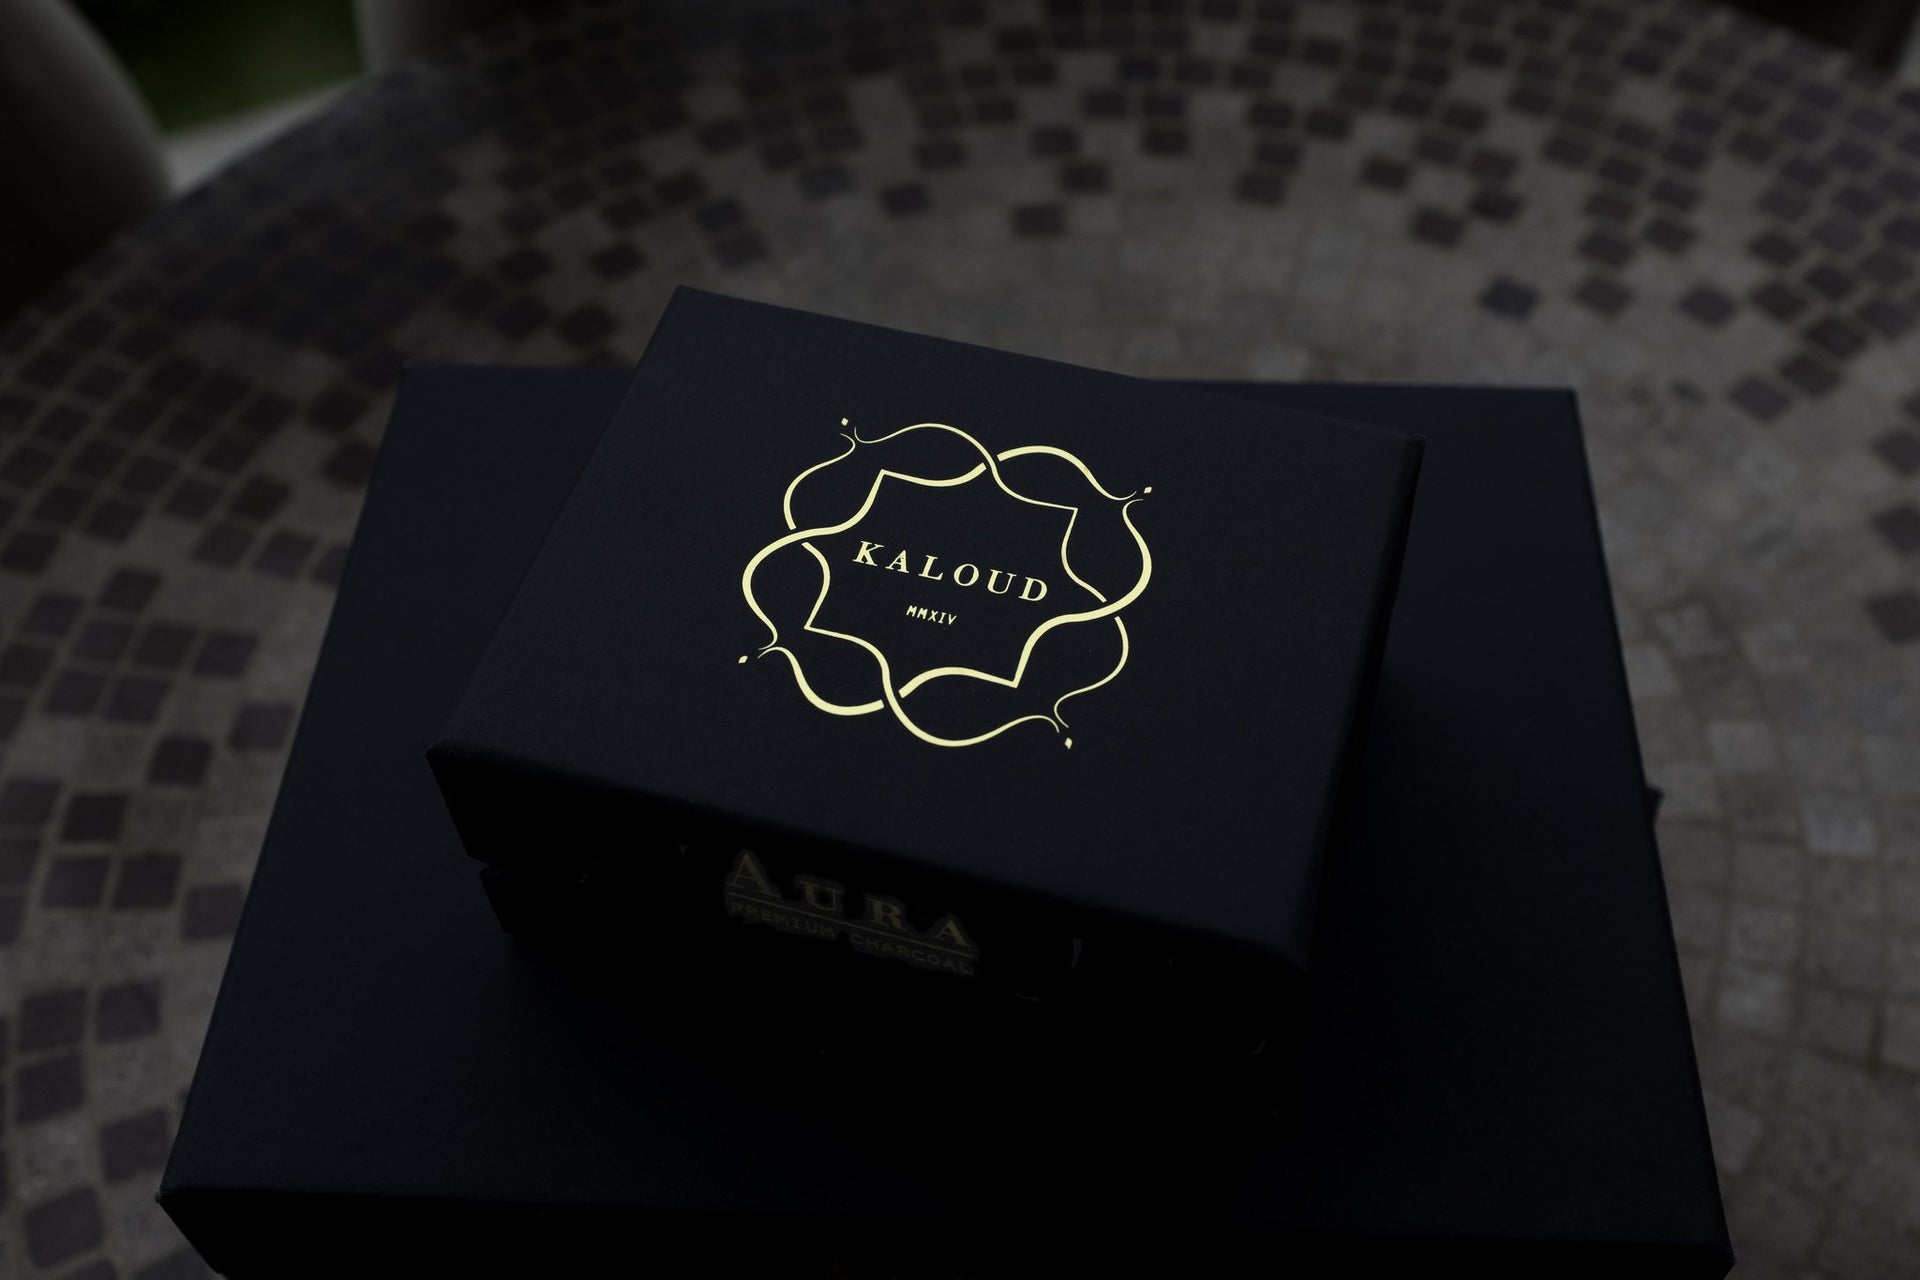 Kaloud Aura Premium Charcoal - 12 pieces packaging - TheHookah.com